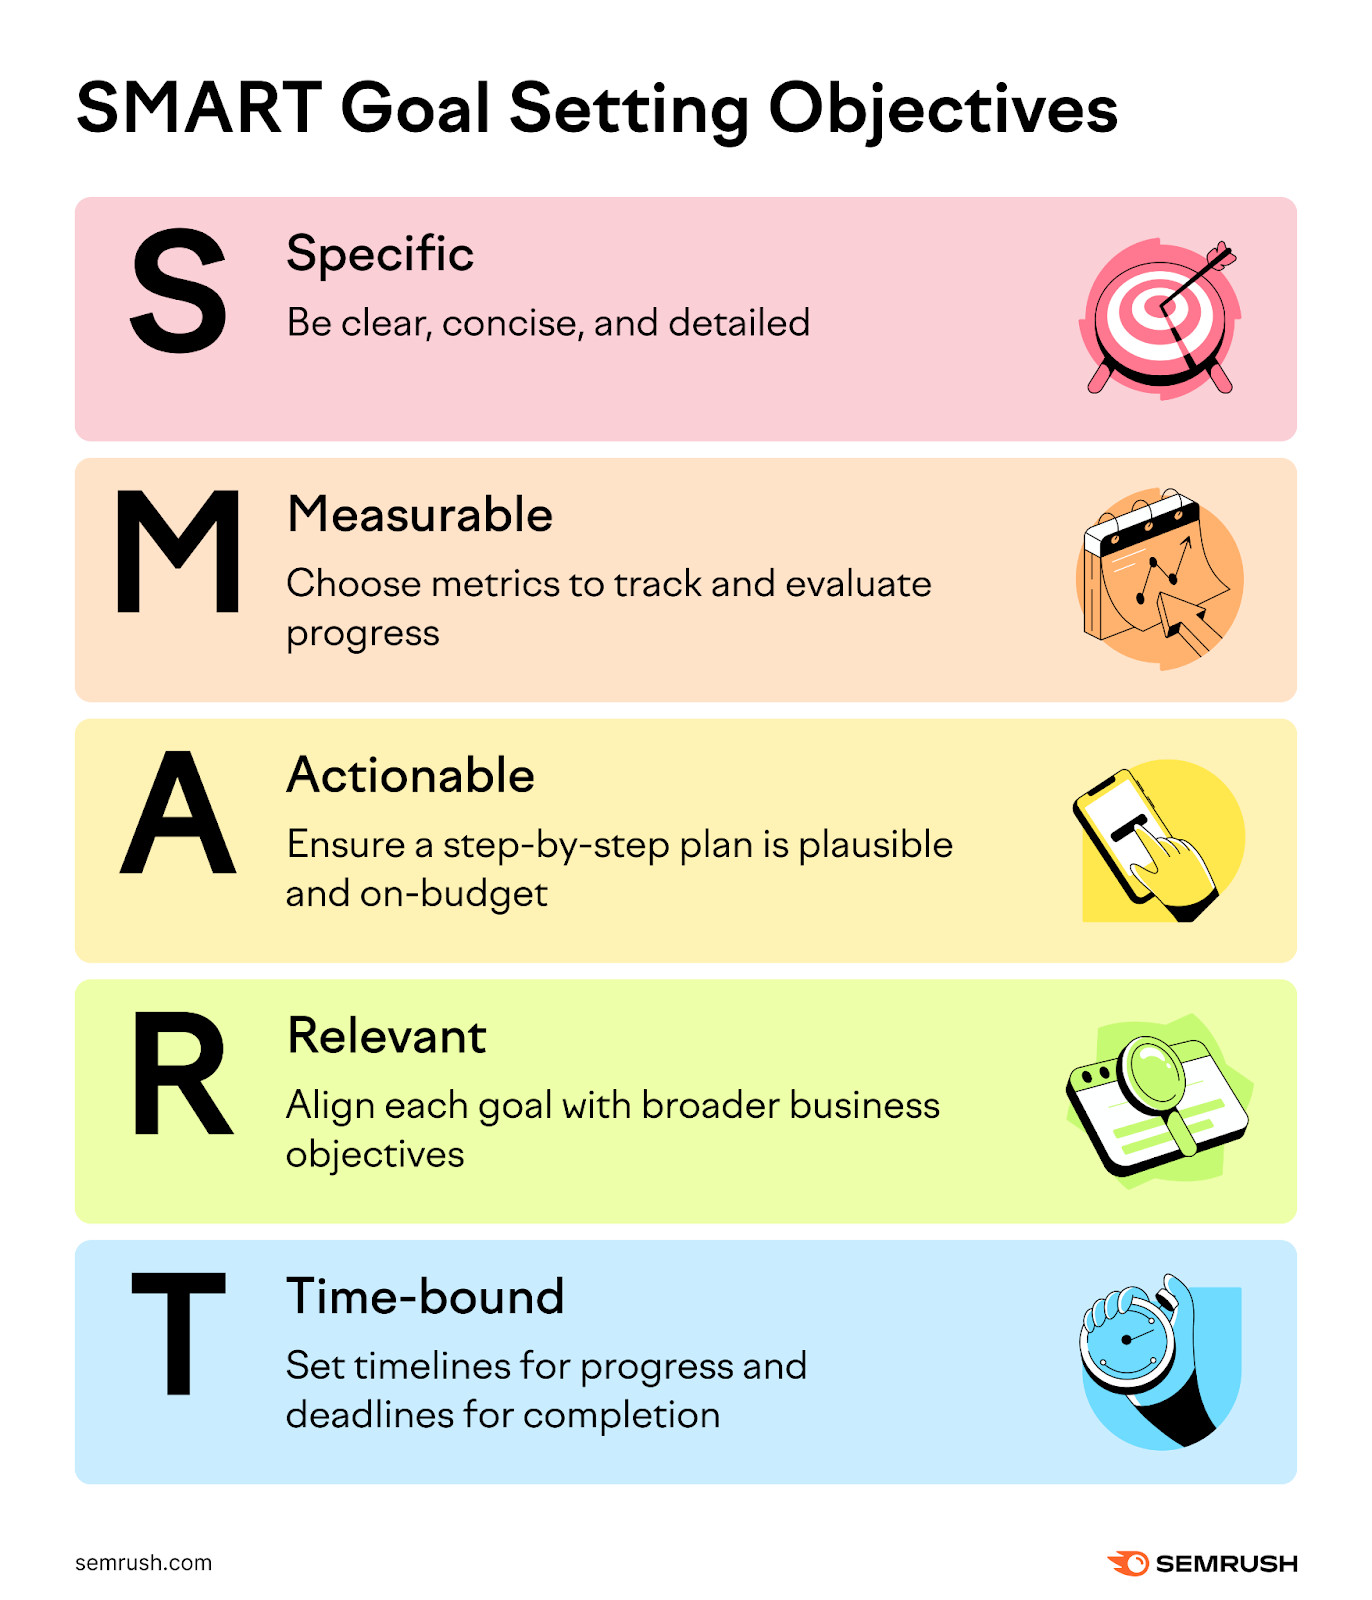 SMART Goal Setting Objectives